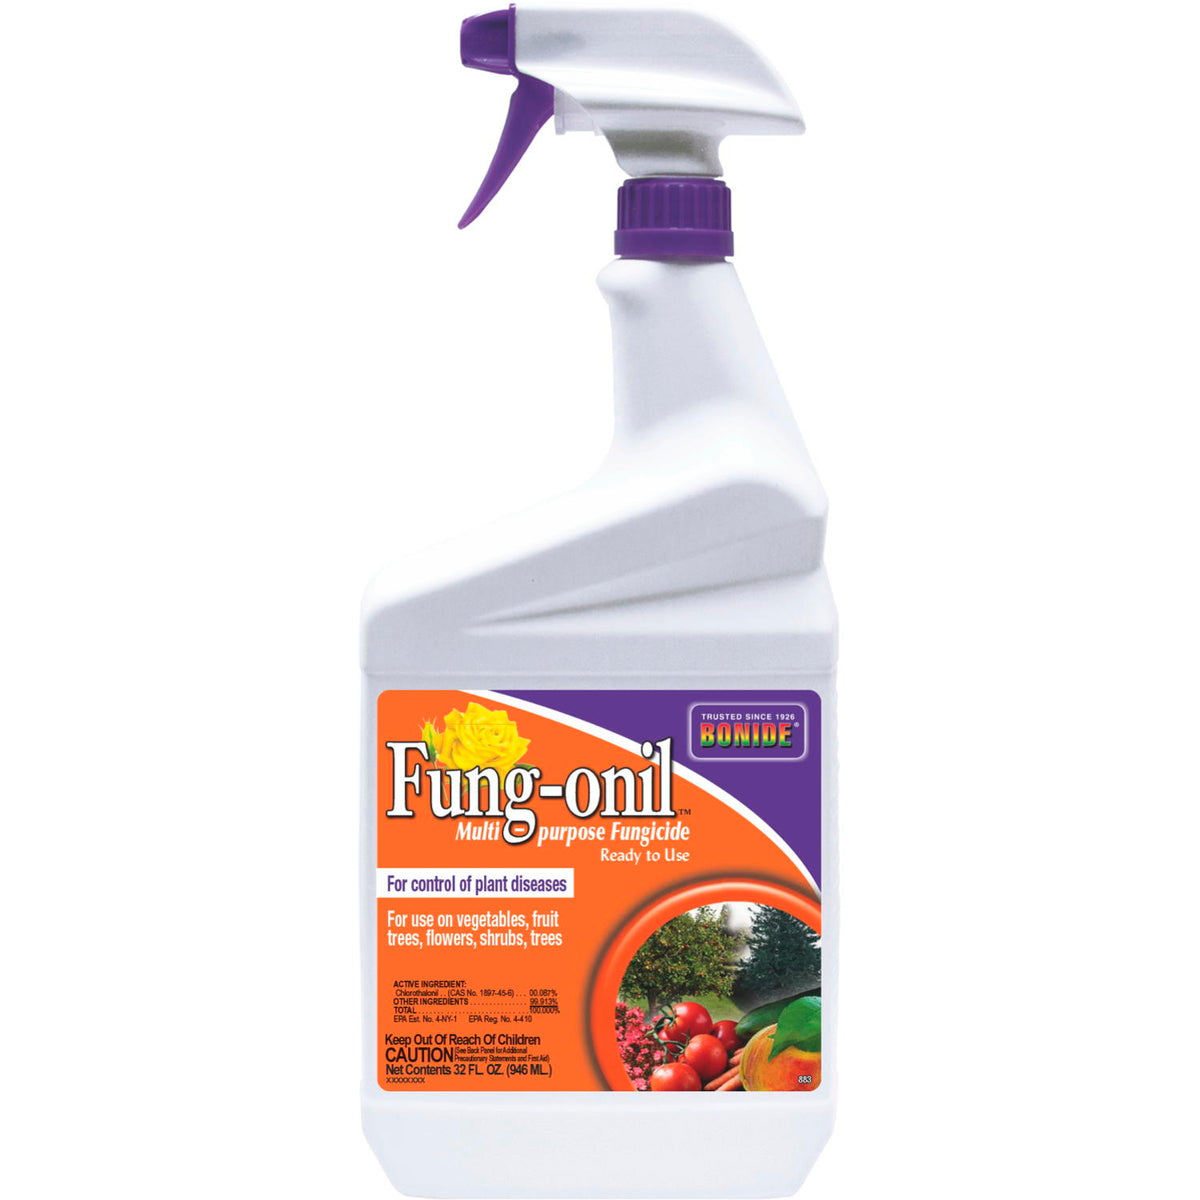 Bonide - Fung-onil Multi-Purpose Fungicide RTU